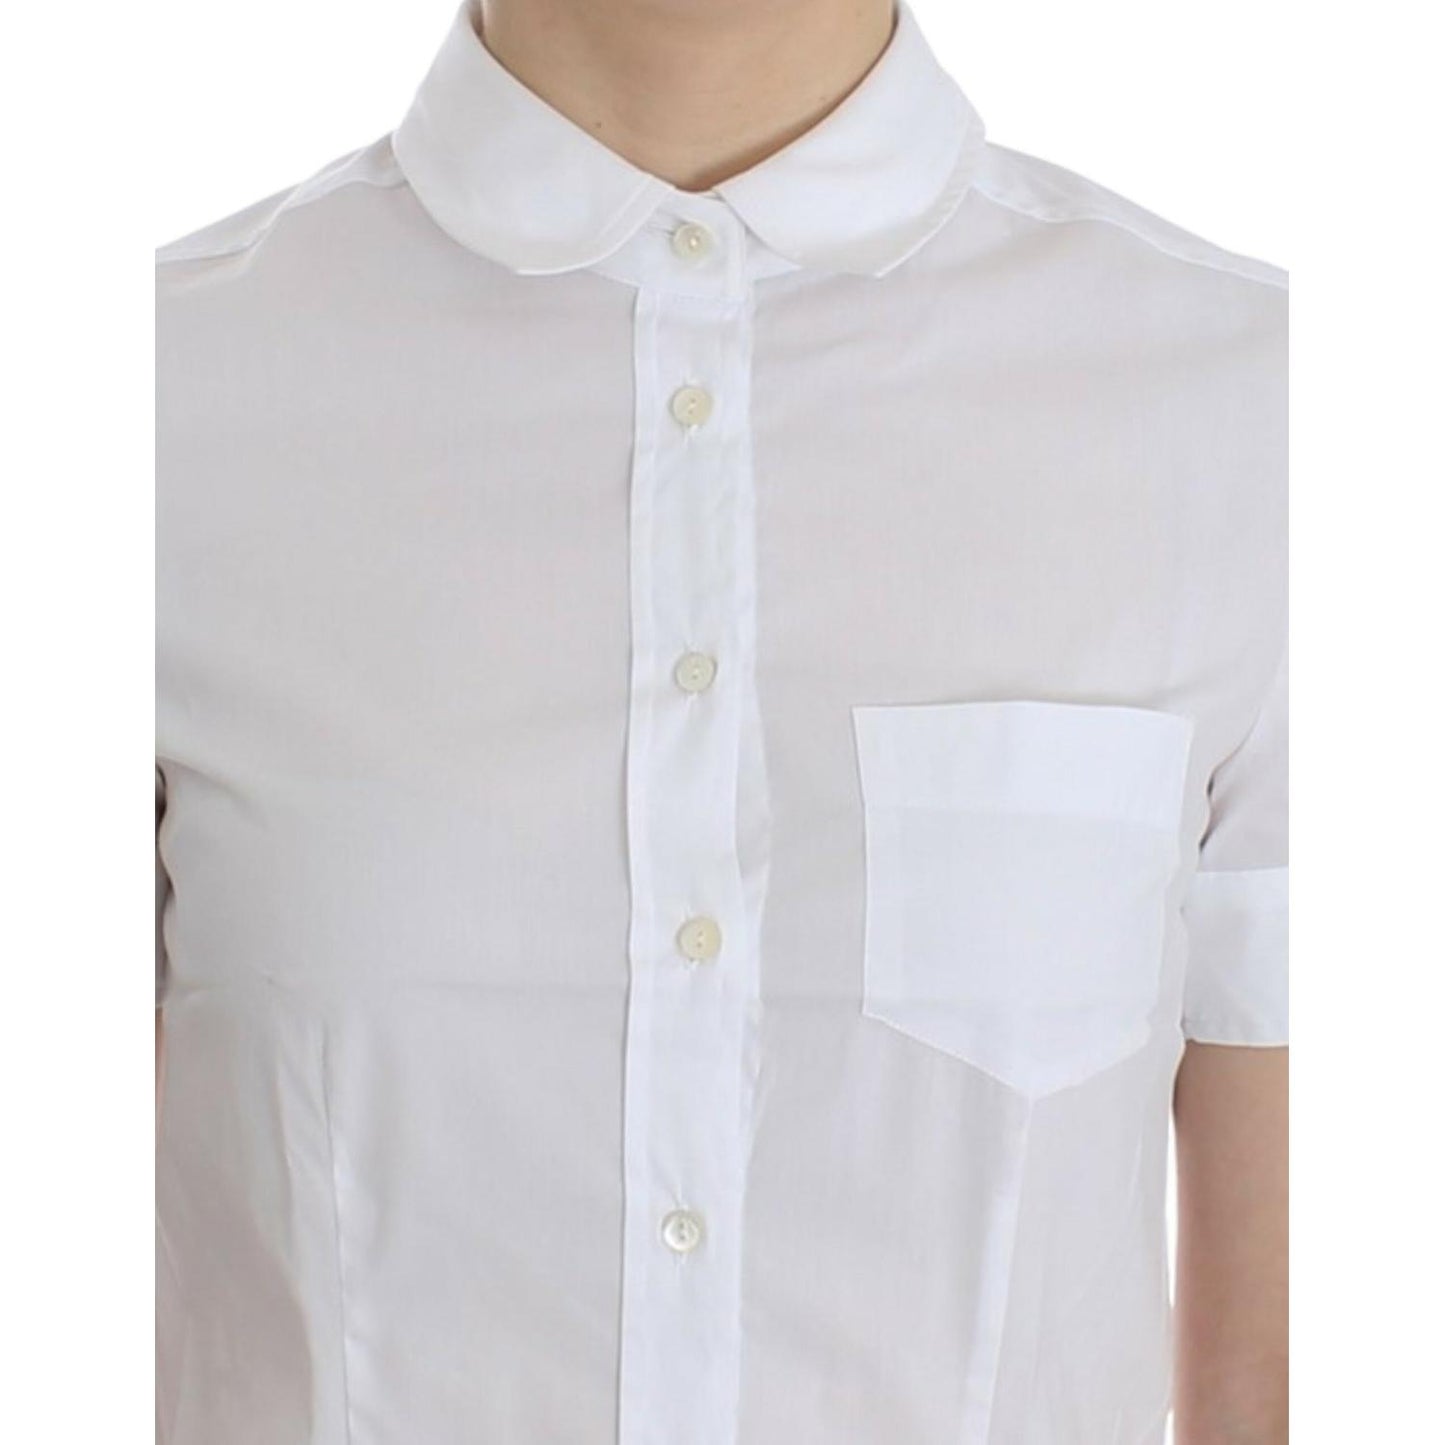 John Galliano Chic White Cotton Blend Shortsleeve Blouse white-cotton-shirt-top